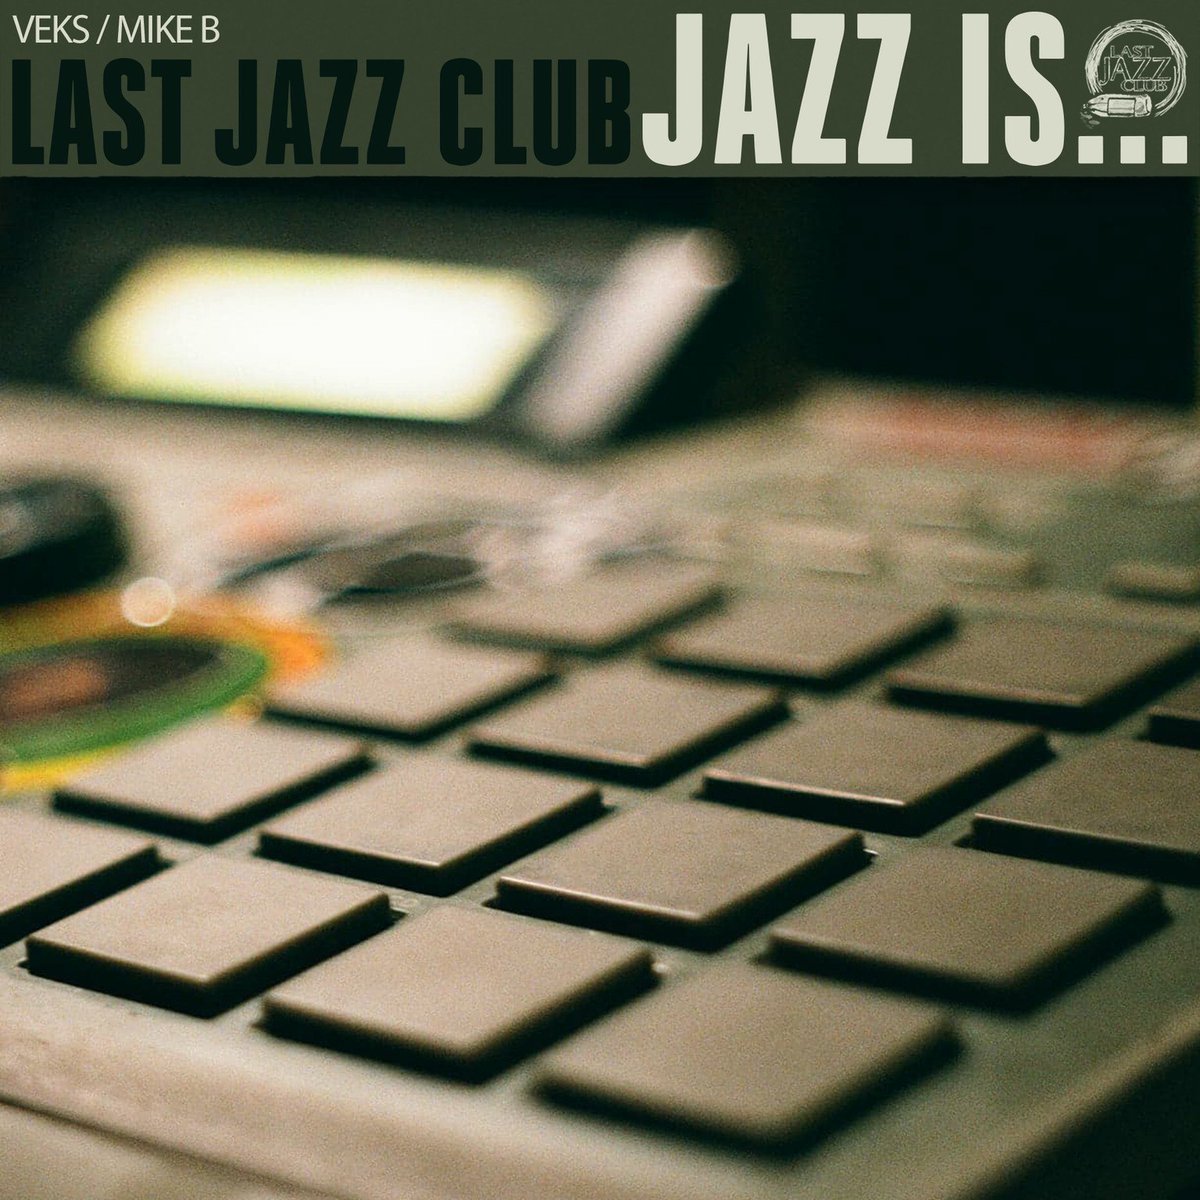 No Words #40: Last Jazz Club, Butcher Brown, Cosmic Analog Ensemble, deeB, DSC & A. Sims